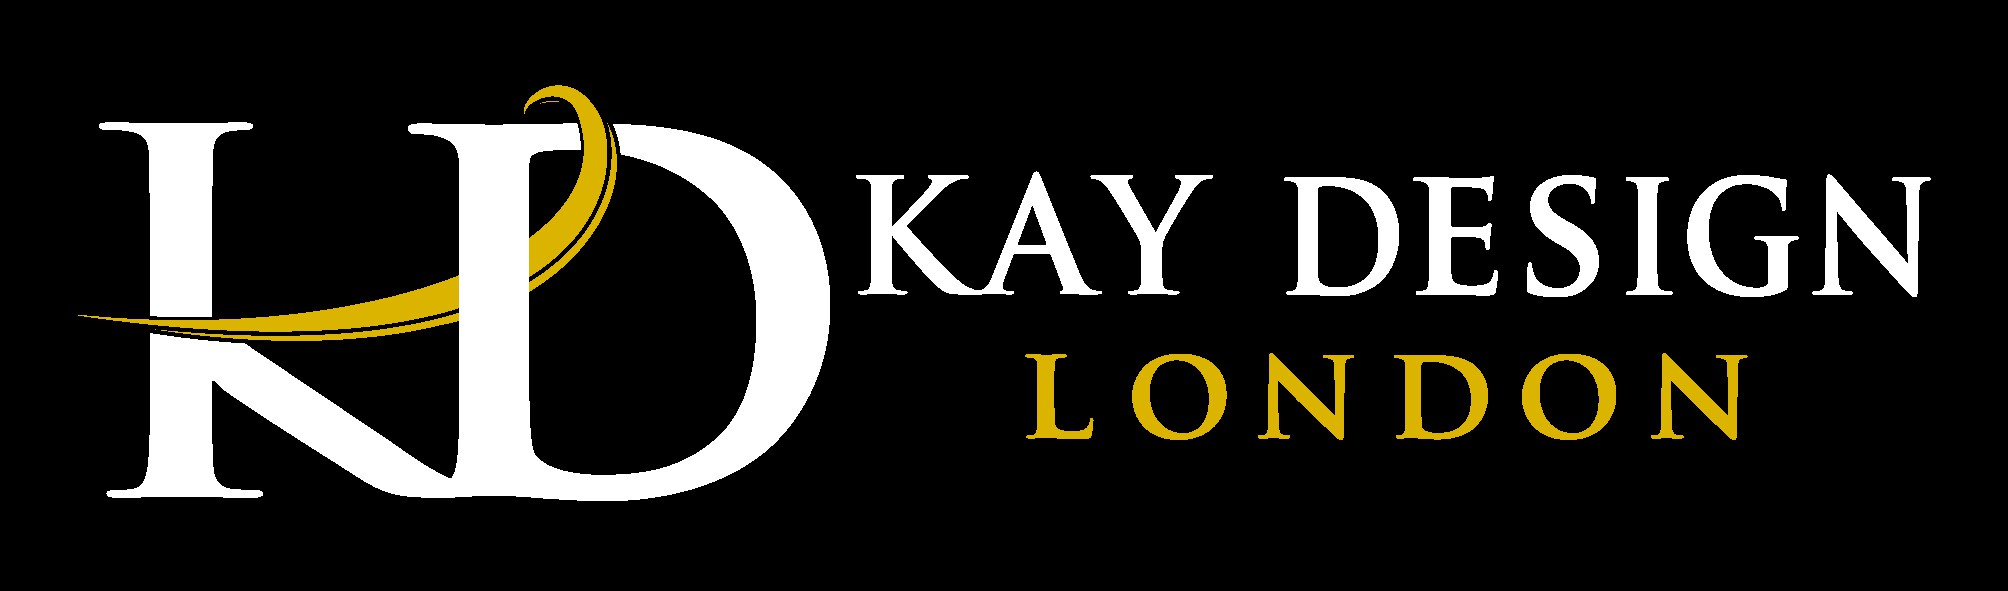 Kay Design London